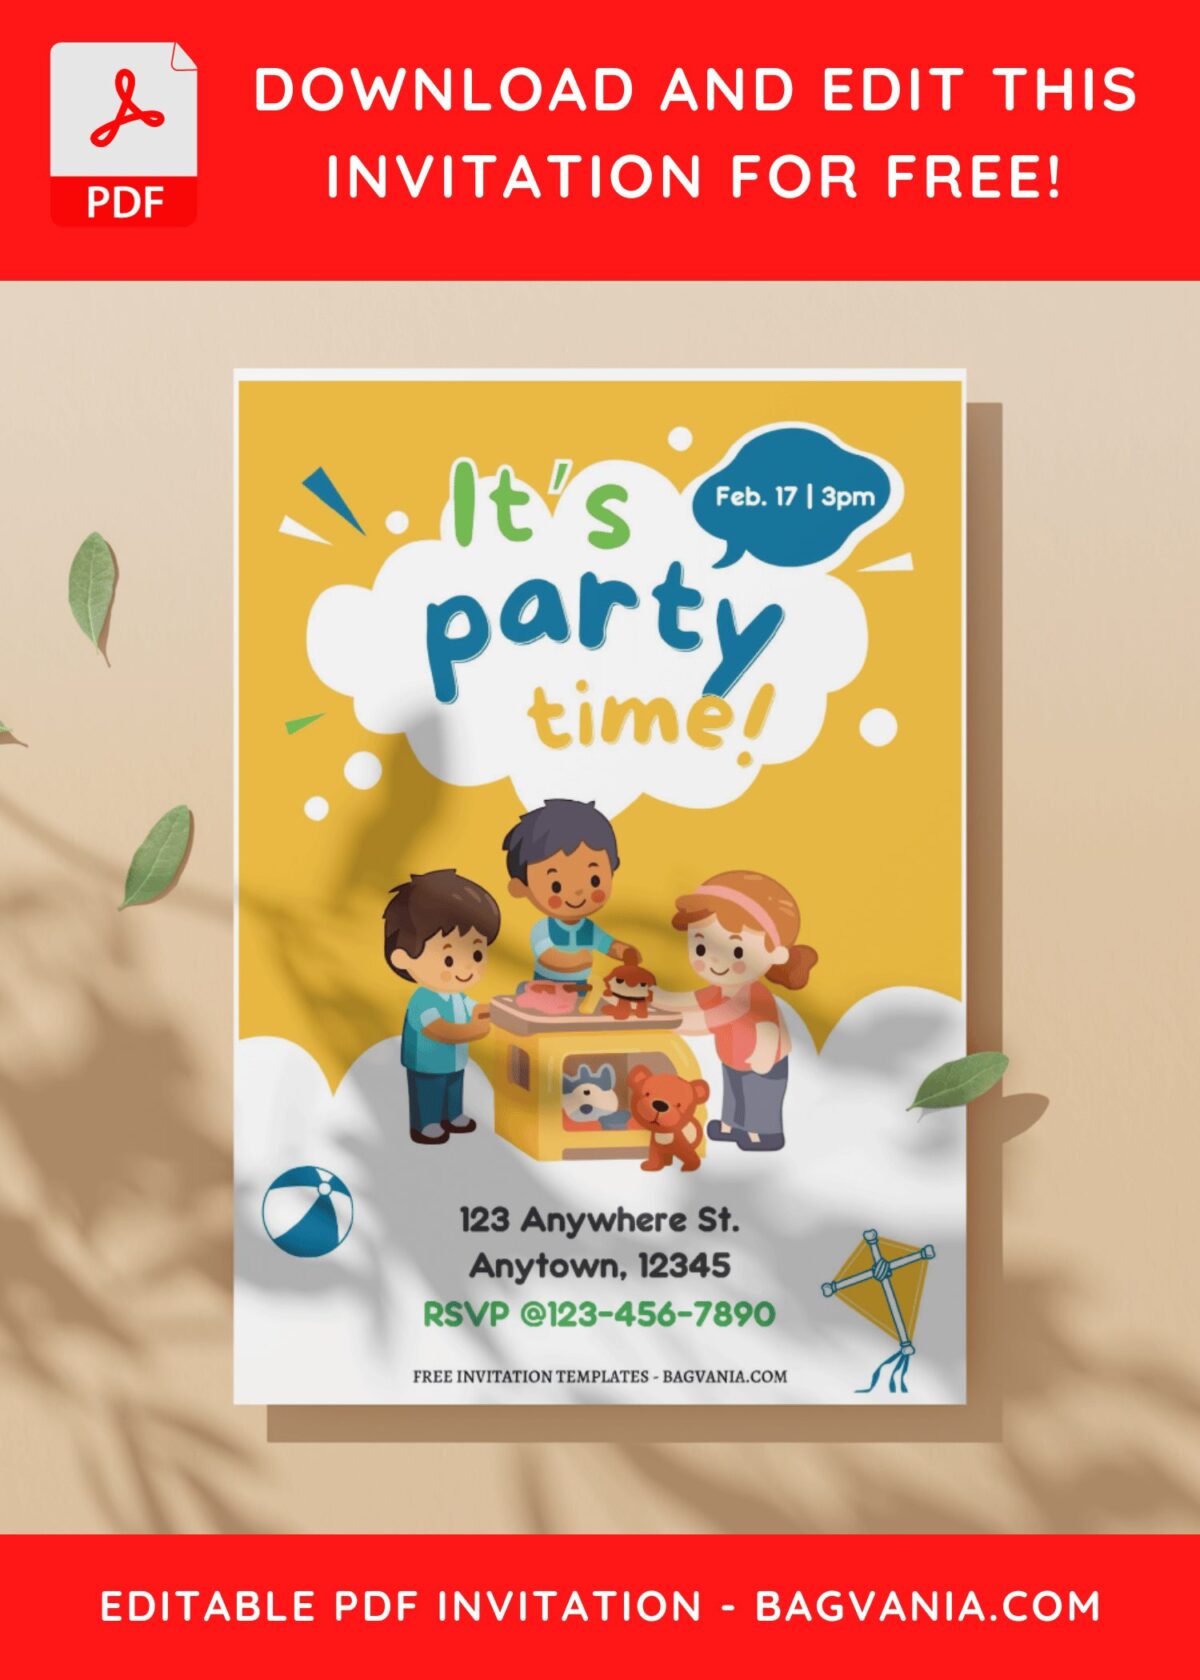 (Easily Edit PDF Invitation) Delightful Kids Party Time Invitation C